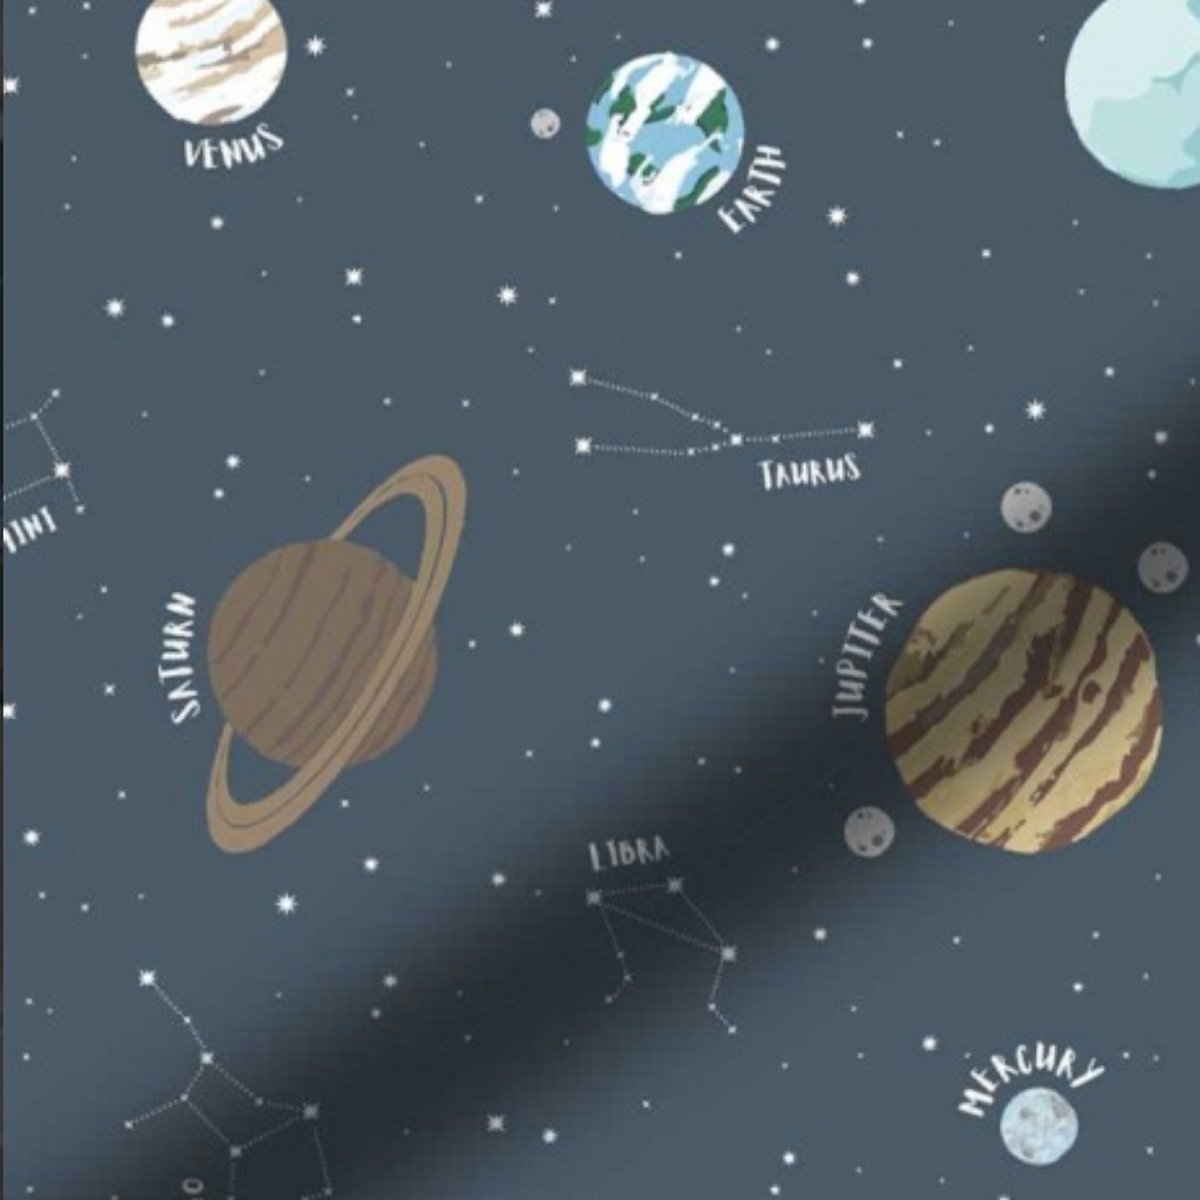 Planets & Space design Kids Blackout Fabric Roller - RB1644 - Art Fever - Art Fever